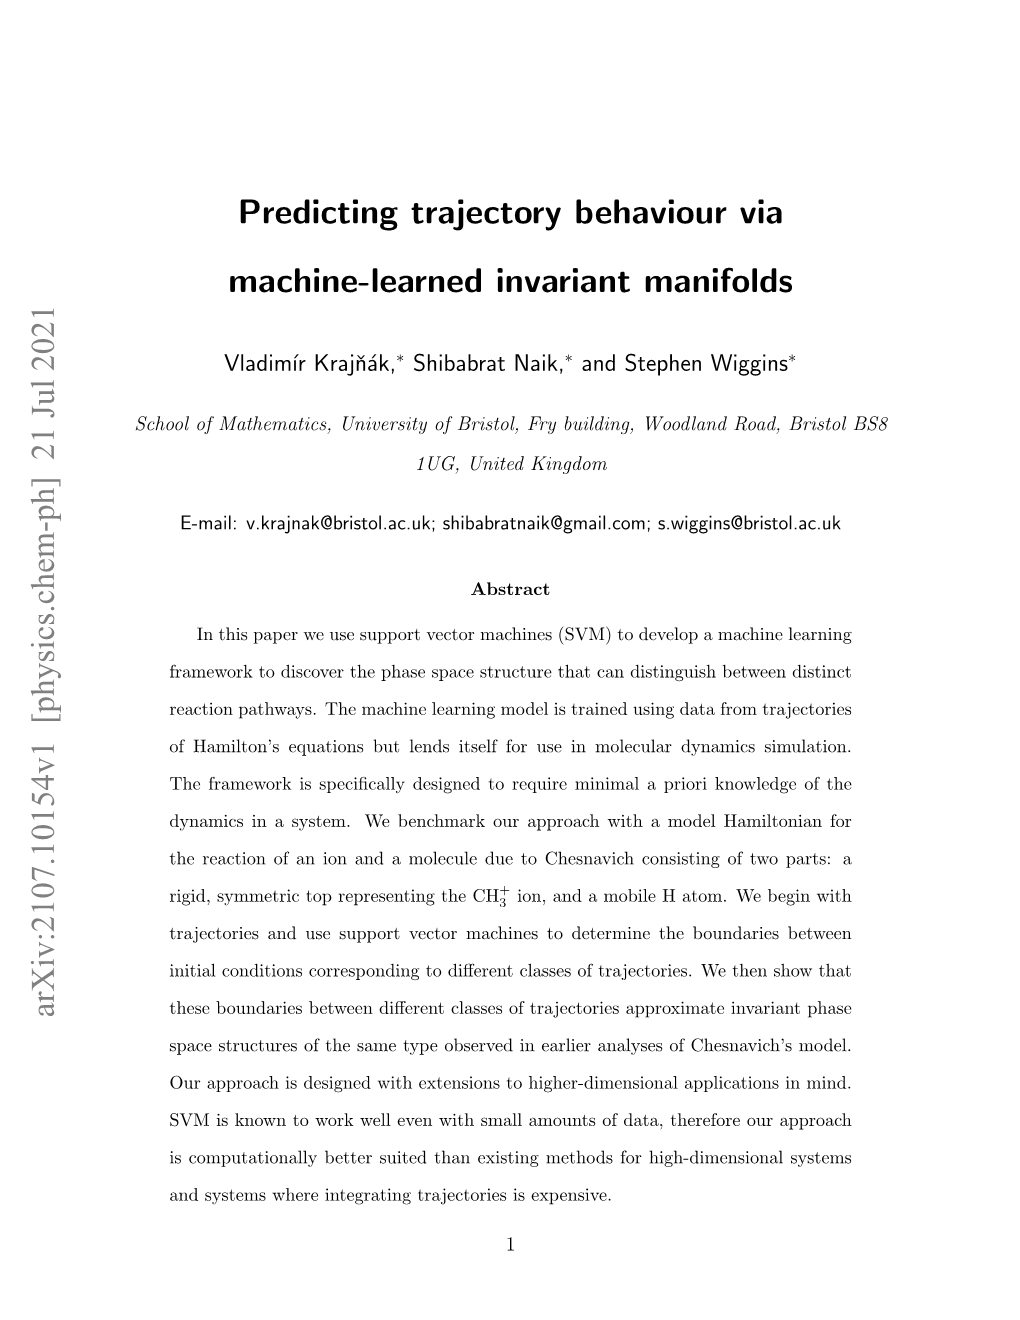 Predicting Trajectory Behaviour Via Machine-Learned Invariant Manifolds Arxiv:2107.10154V1 [Physics.Chem-Ph] 21 Jul 2021